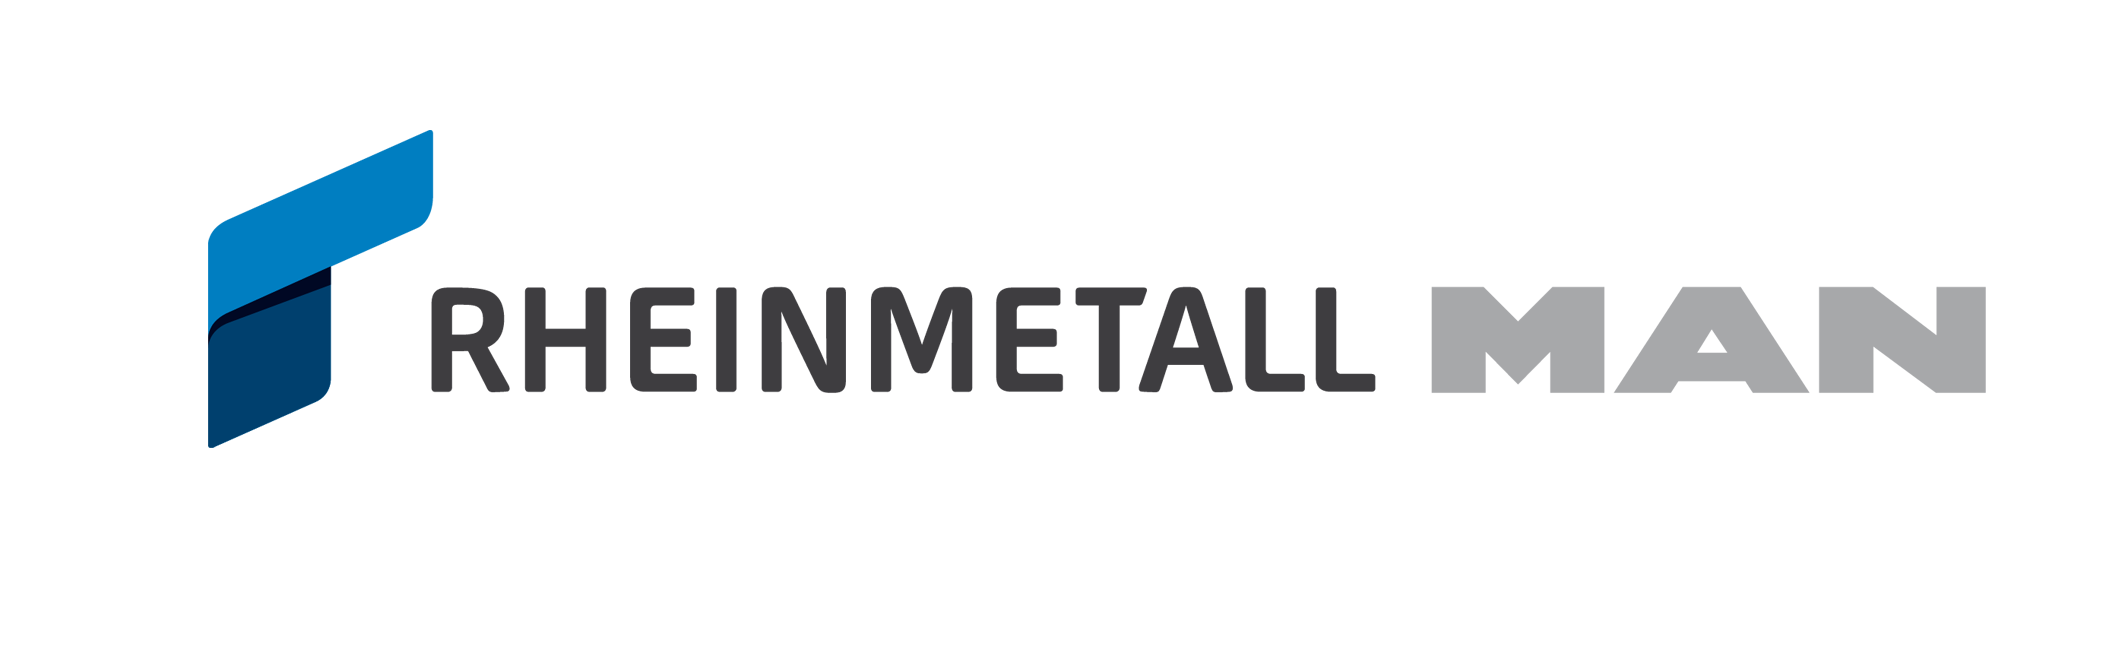 Kunde Rheinmetall Logo